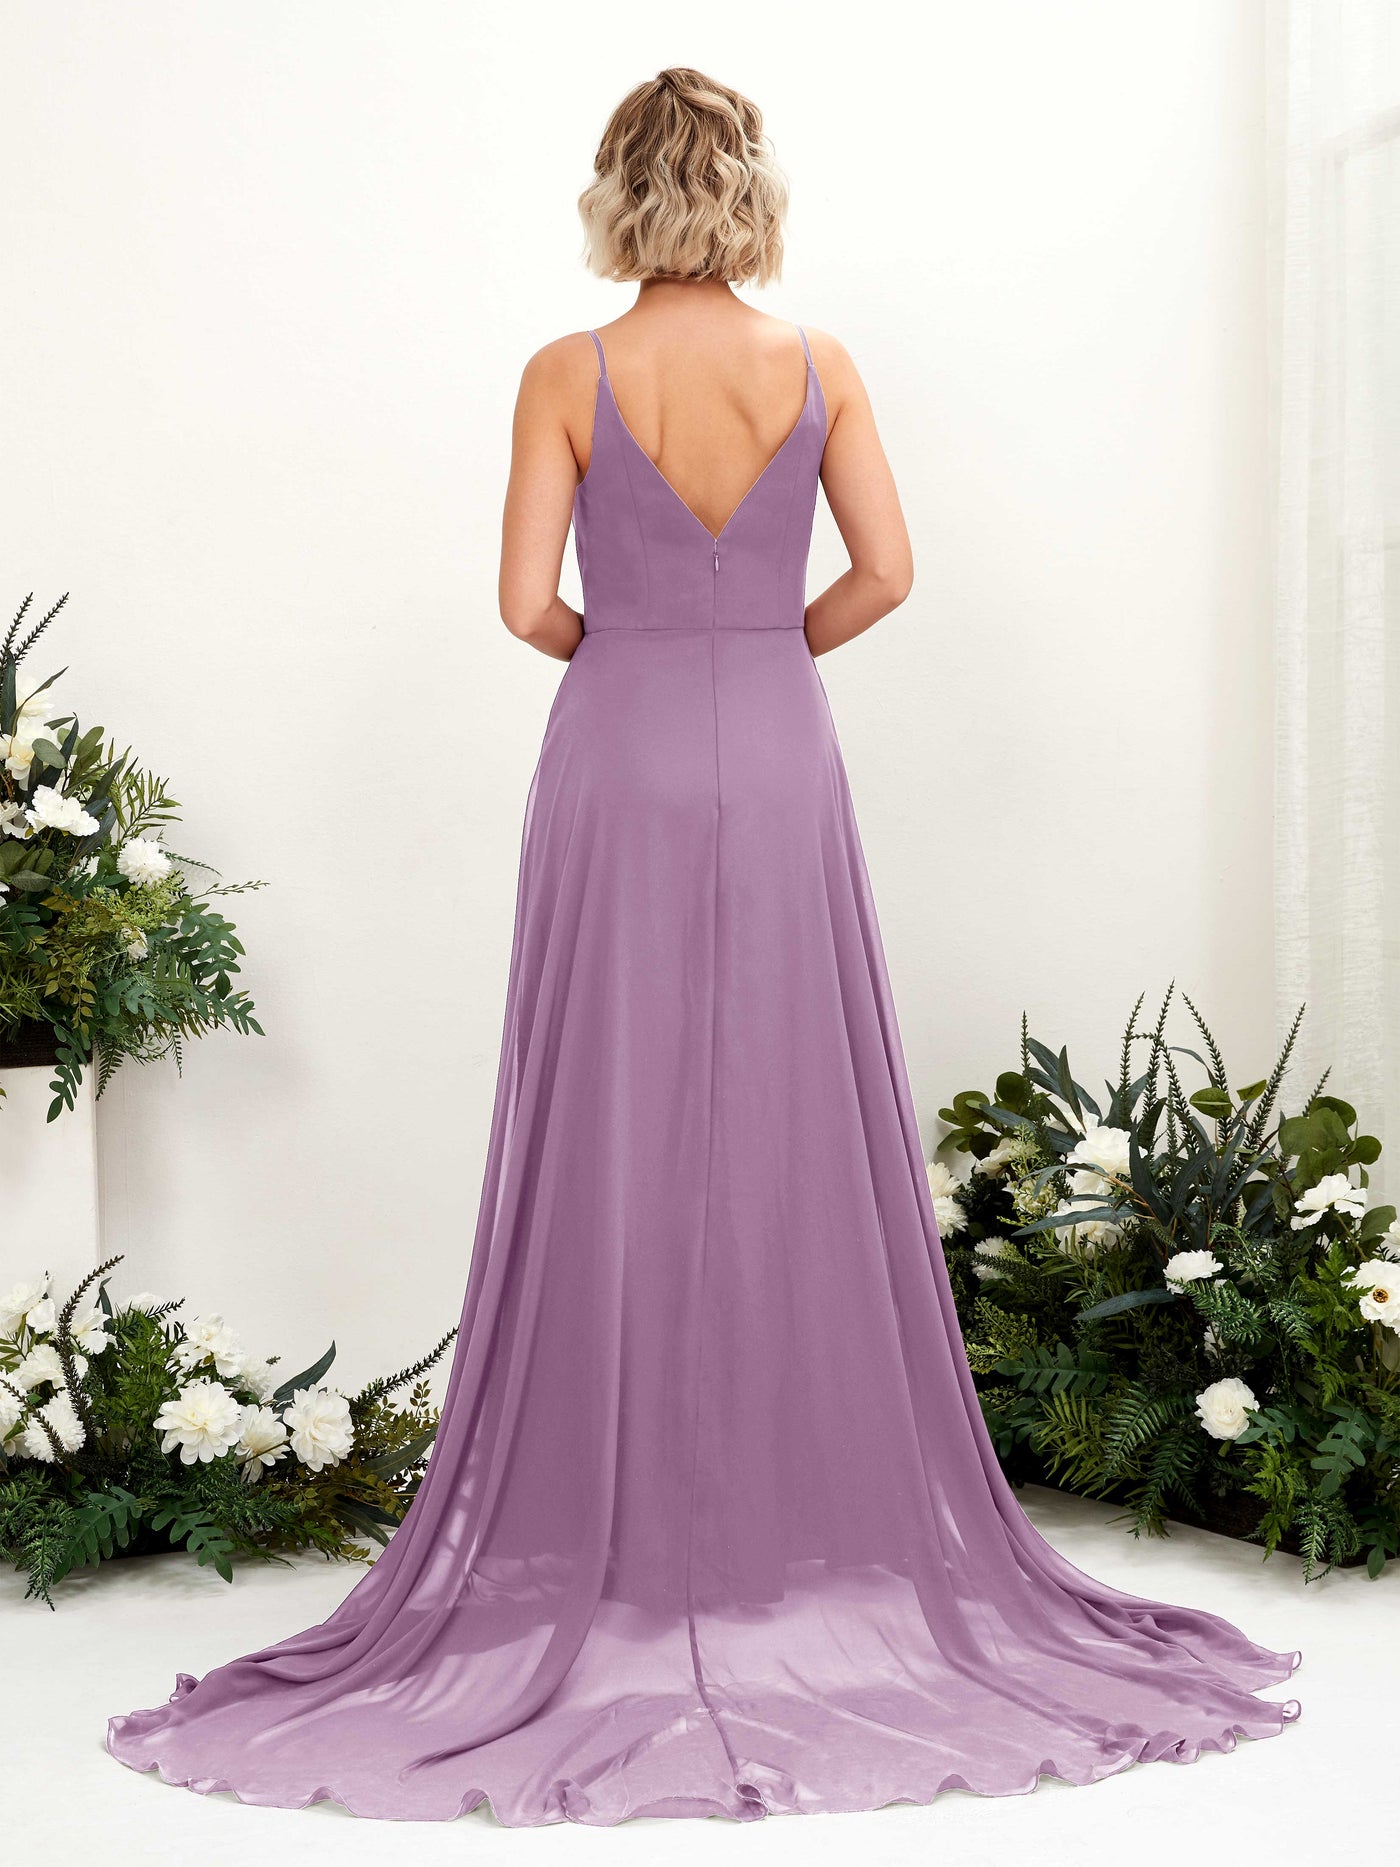 Orchid Mist Bridesmaid Dresses Bridesmaid Dress A-line Chiffon V-neck Full Length Sleeveless Wedding Party Dress (81224121)#color_orchid-mist